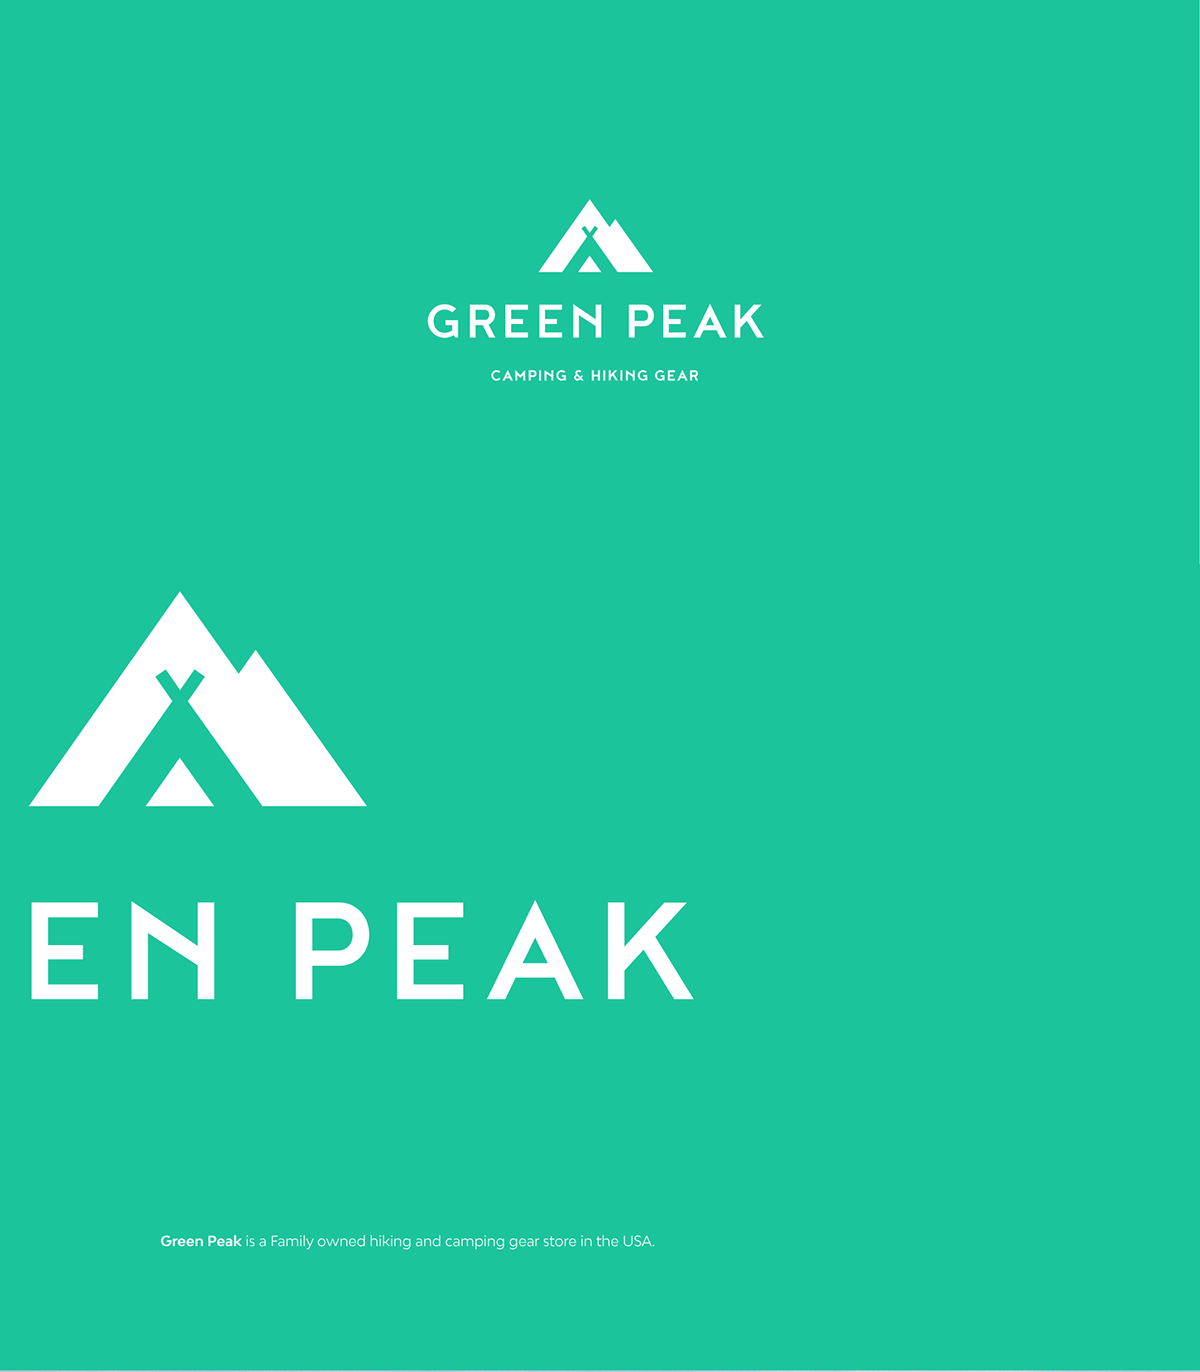 Camping Logo - Green Peak - Outdoor, Hiking and camping logo | Deividas Bielskis